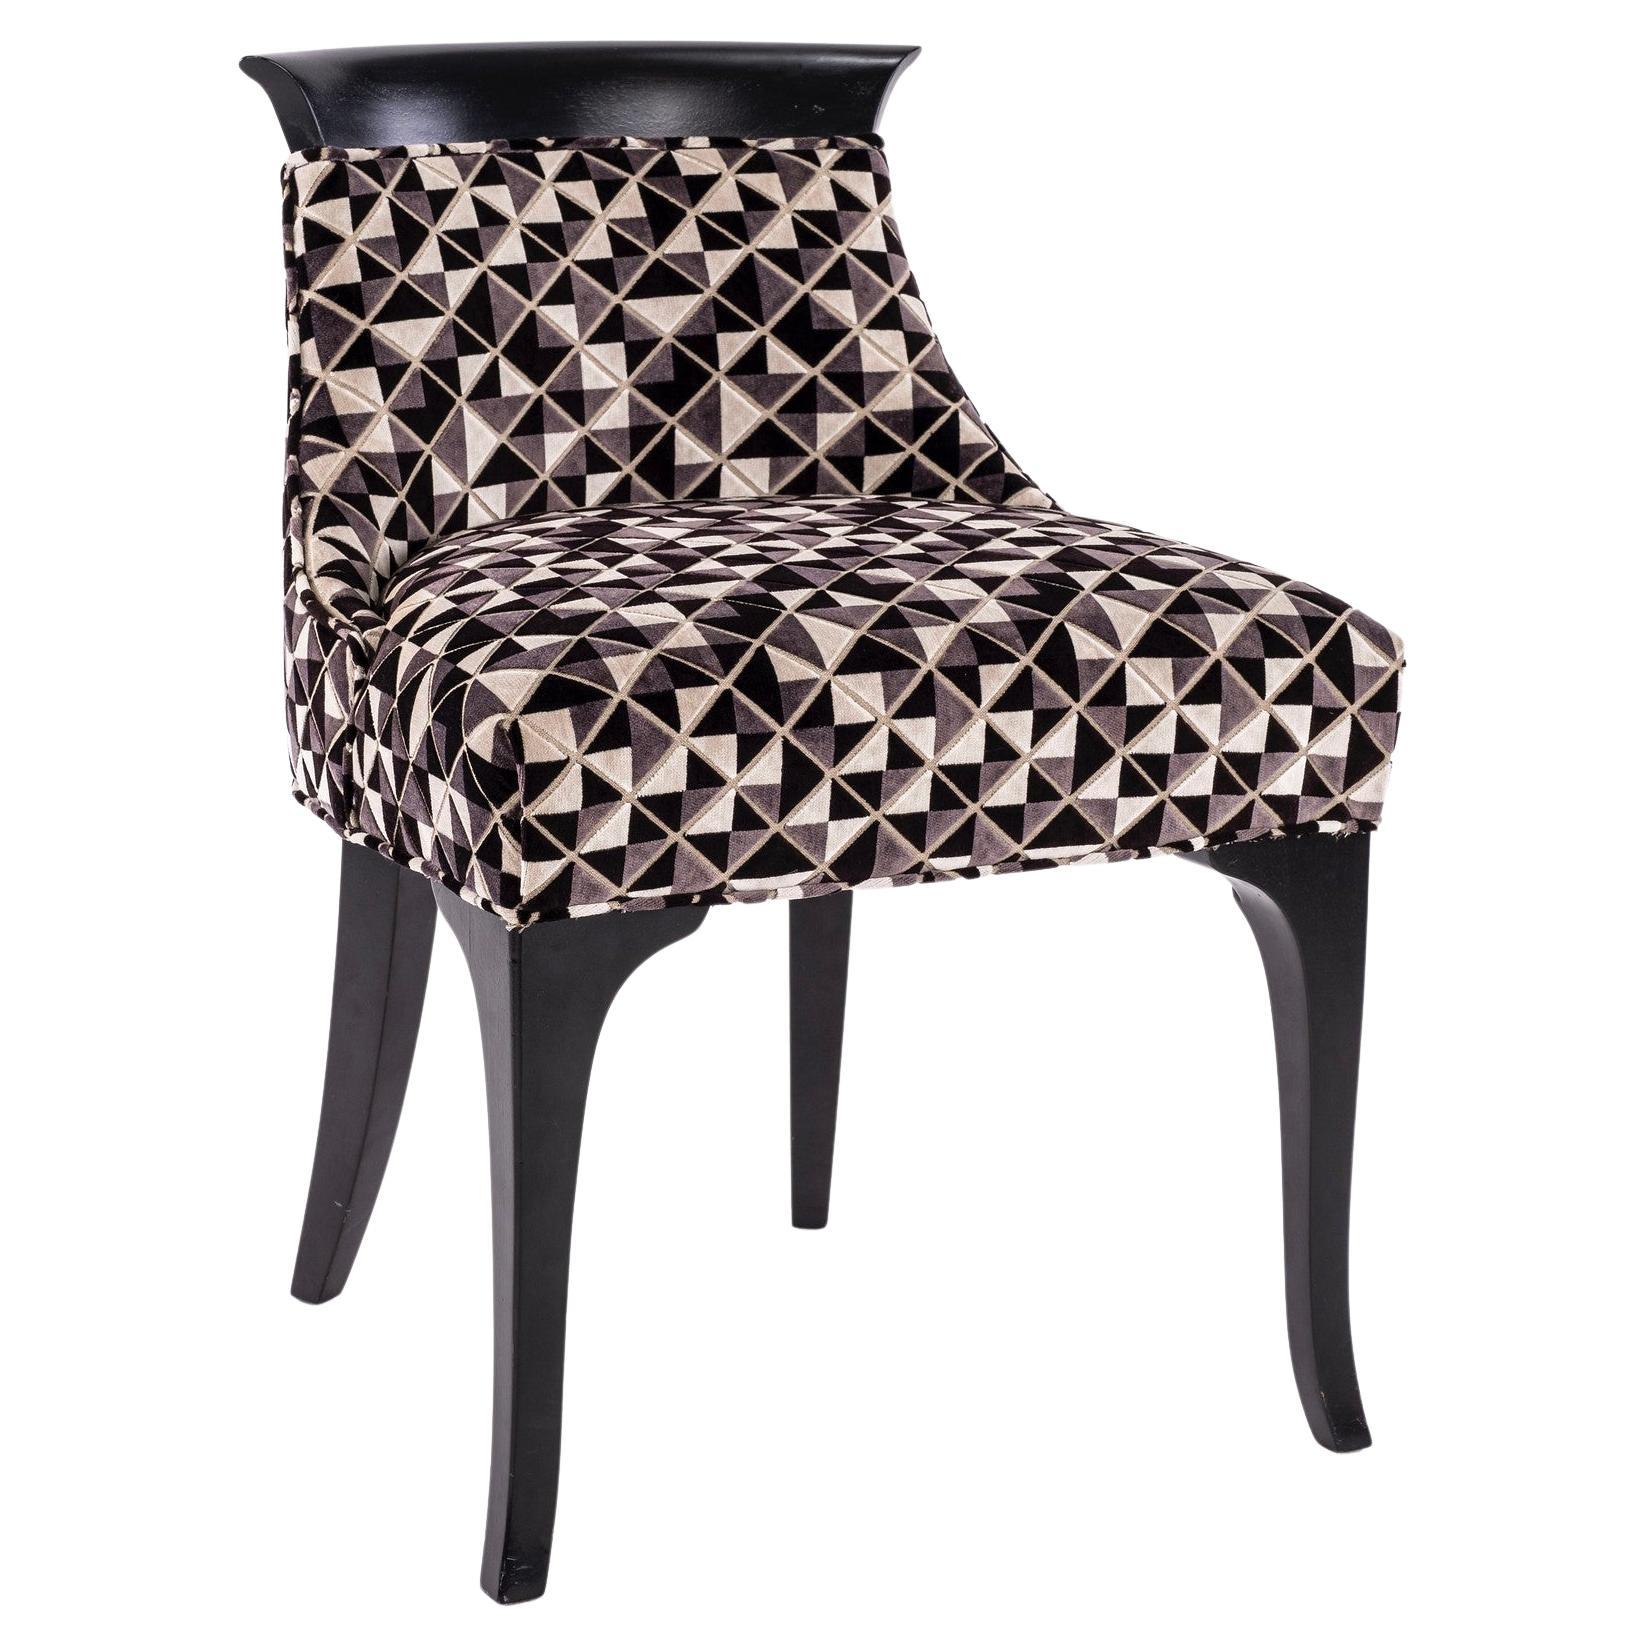 Black and White Slipper Chair